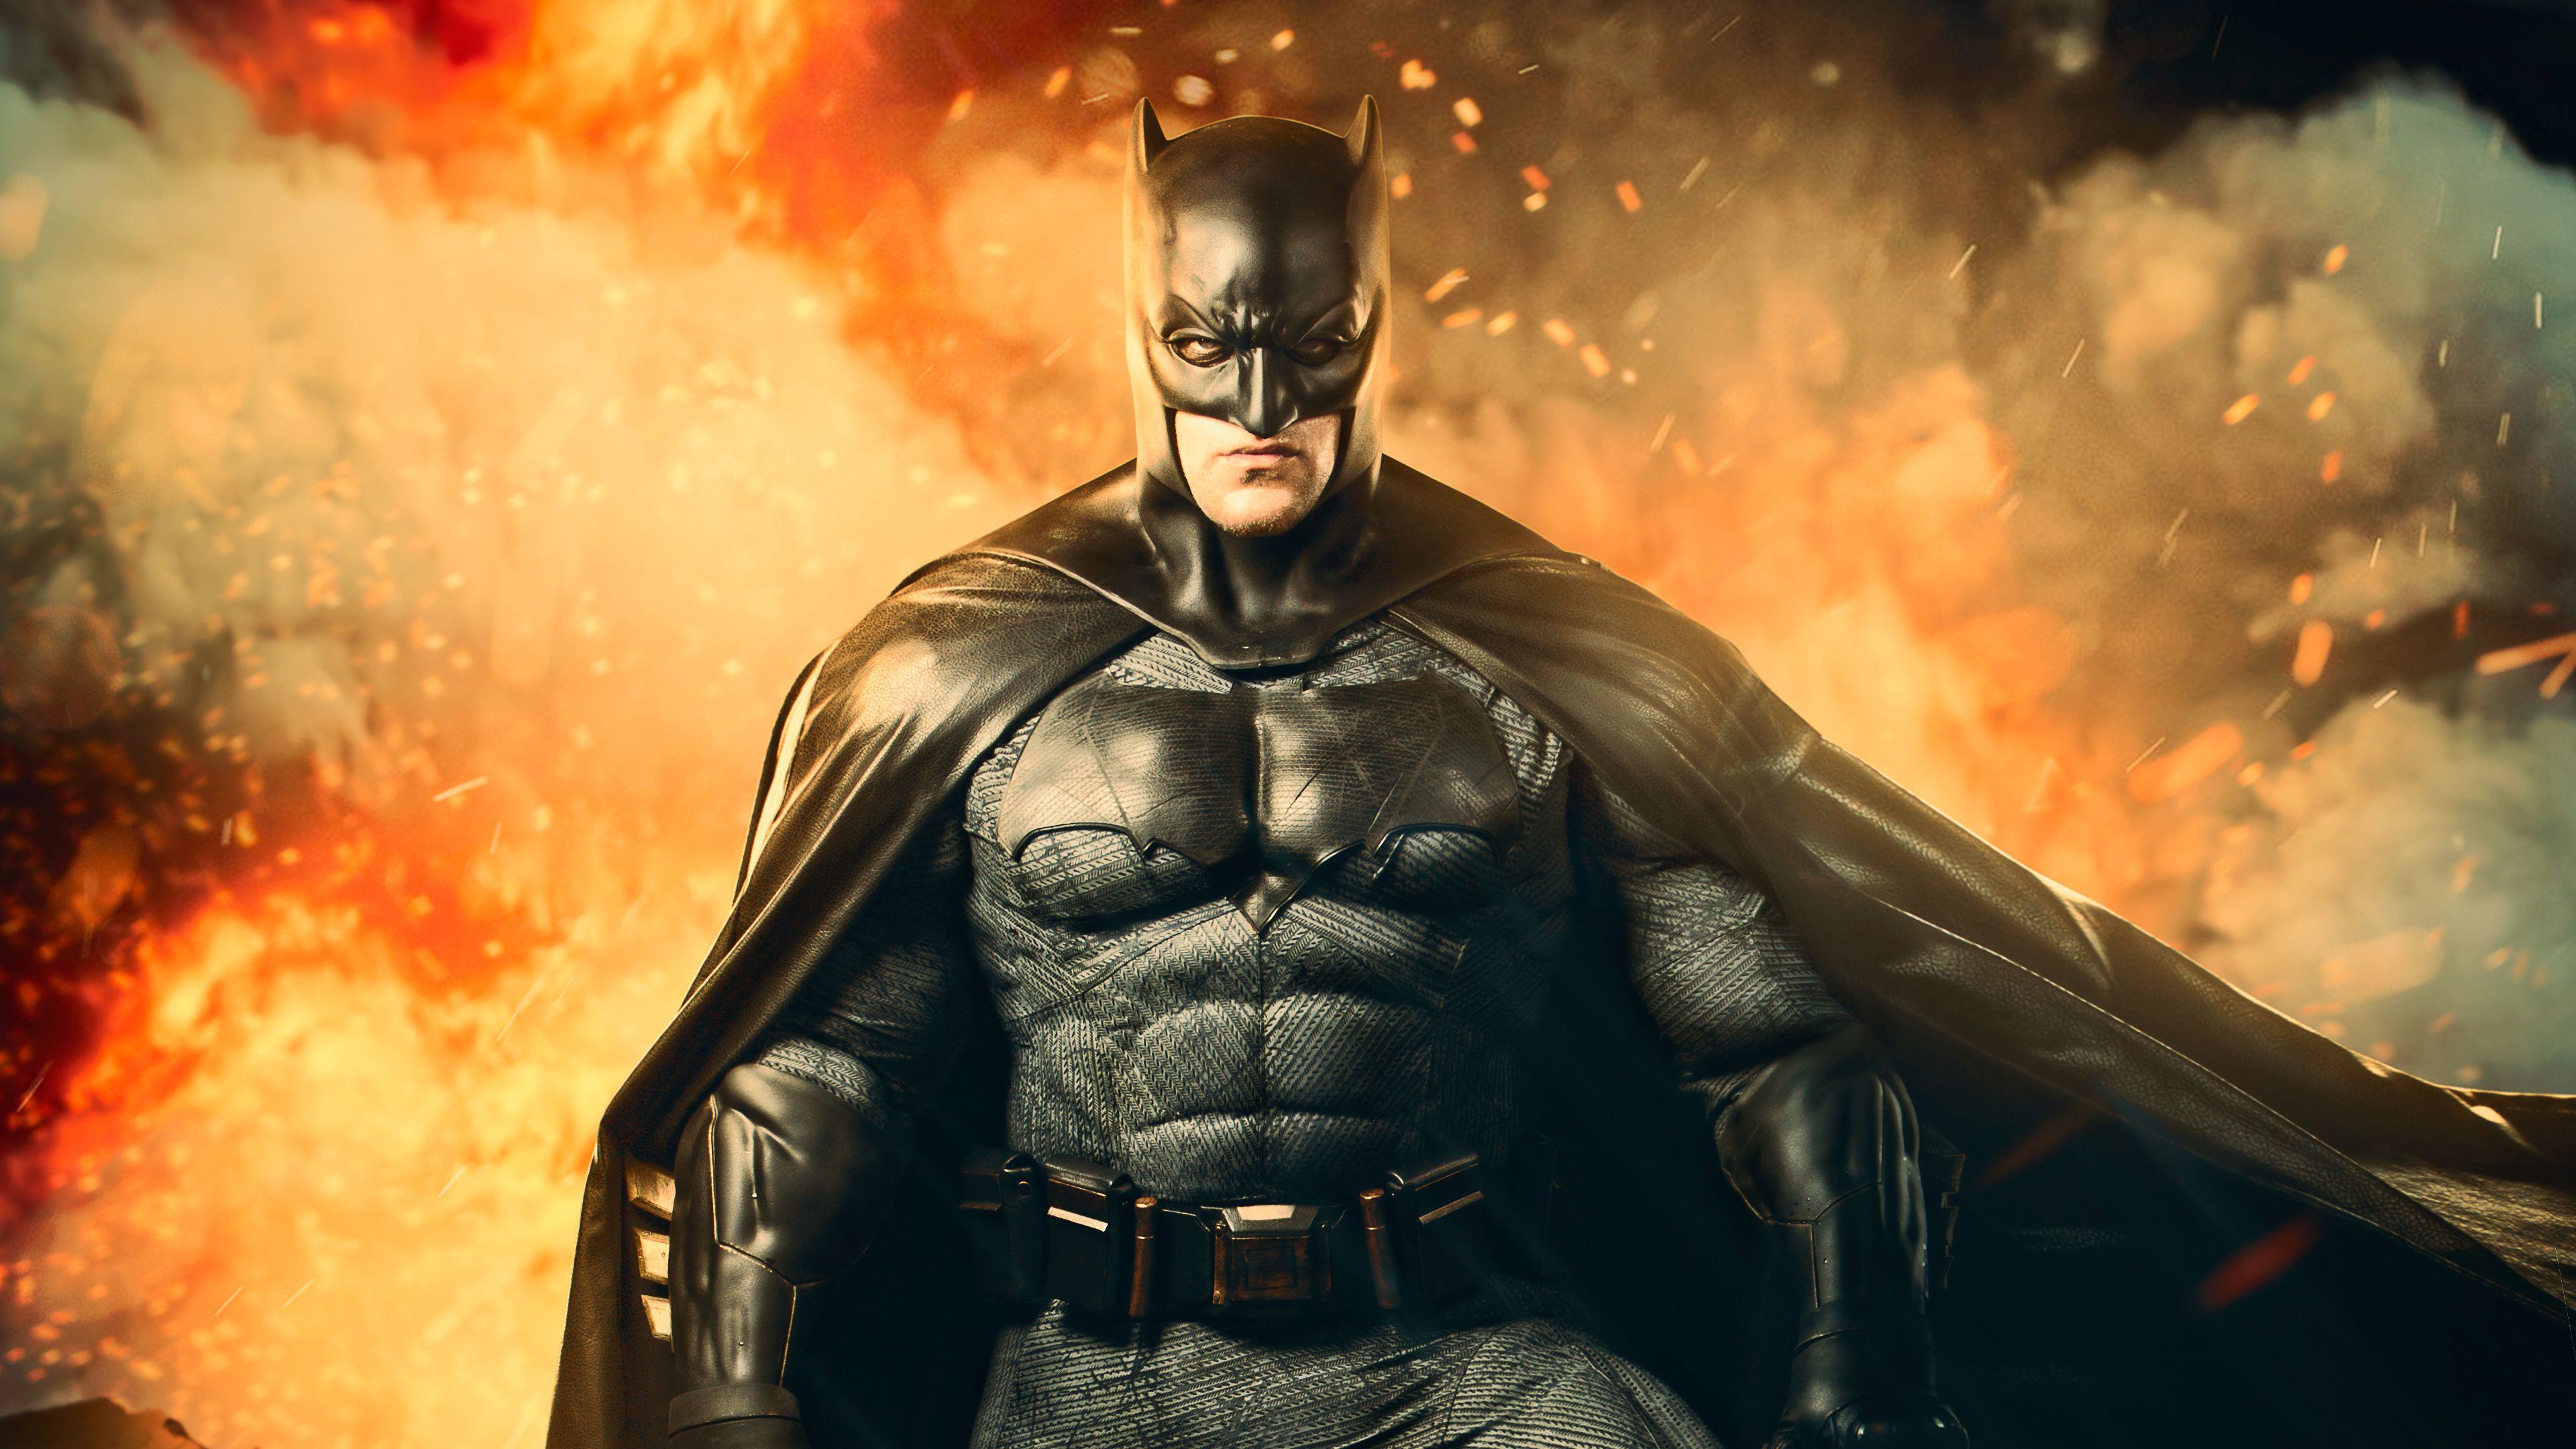 Batman 4k Cosplay, HD Superheroes, 4k Wallpaper, Image